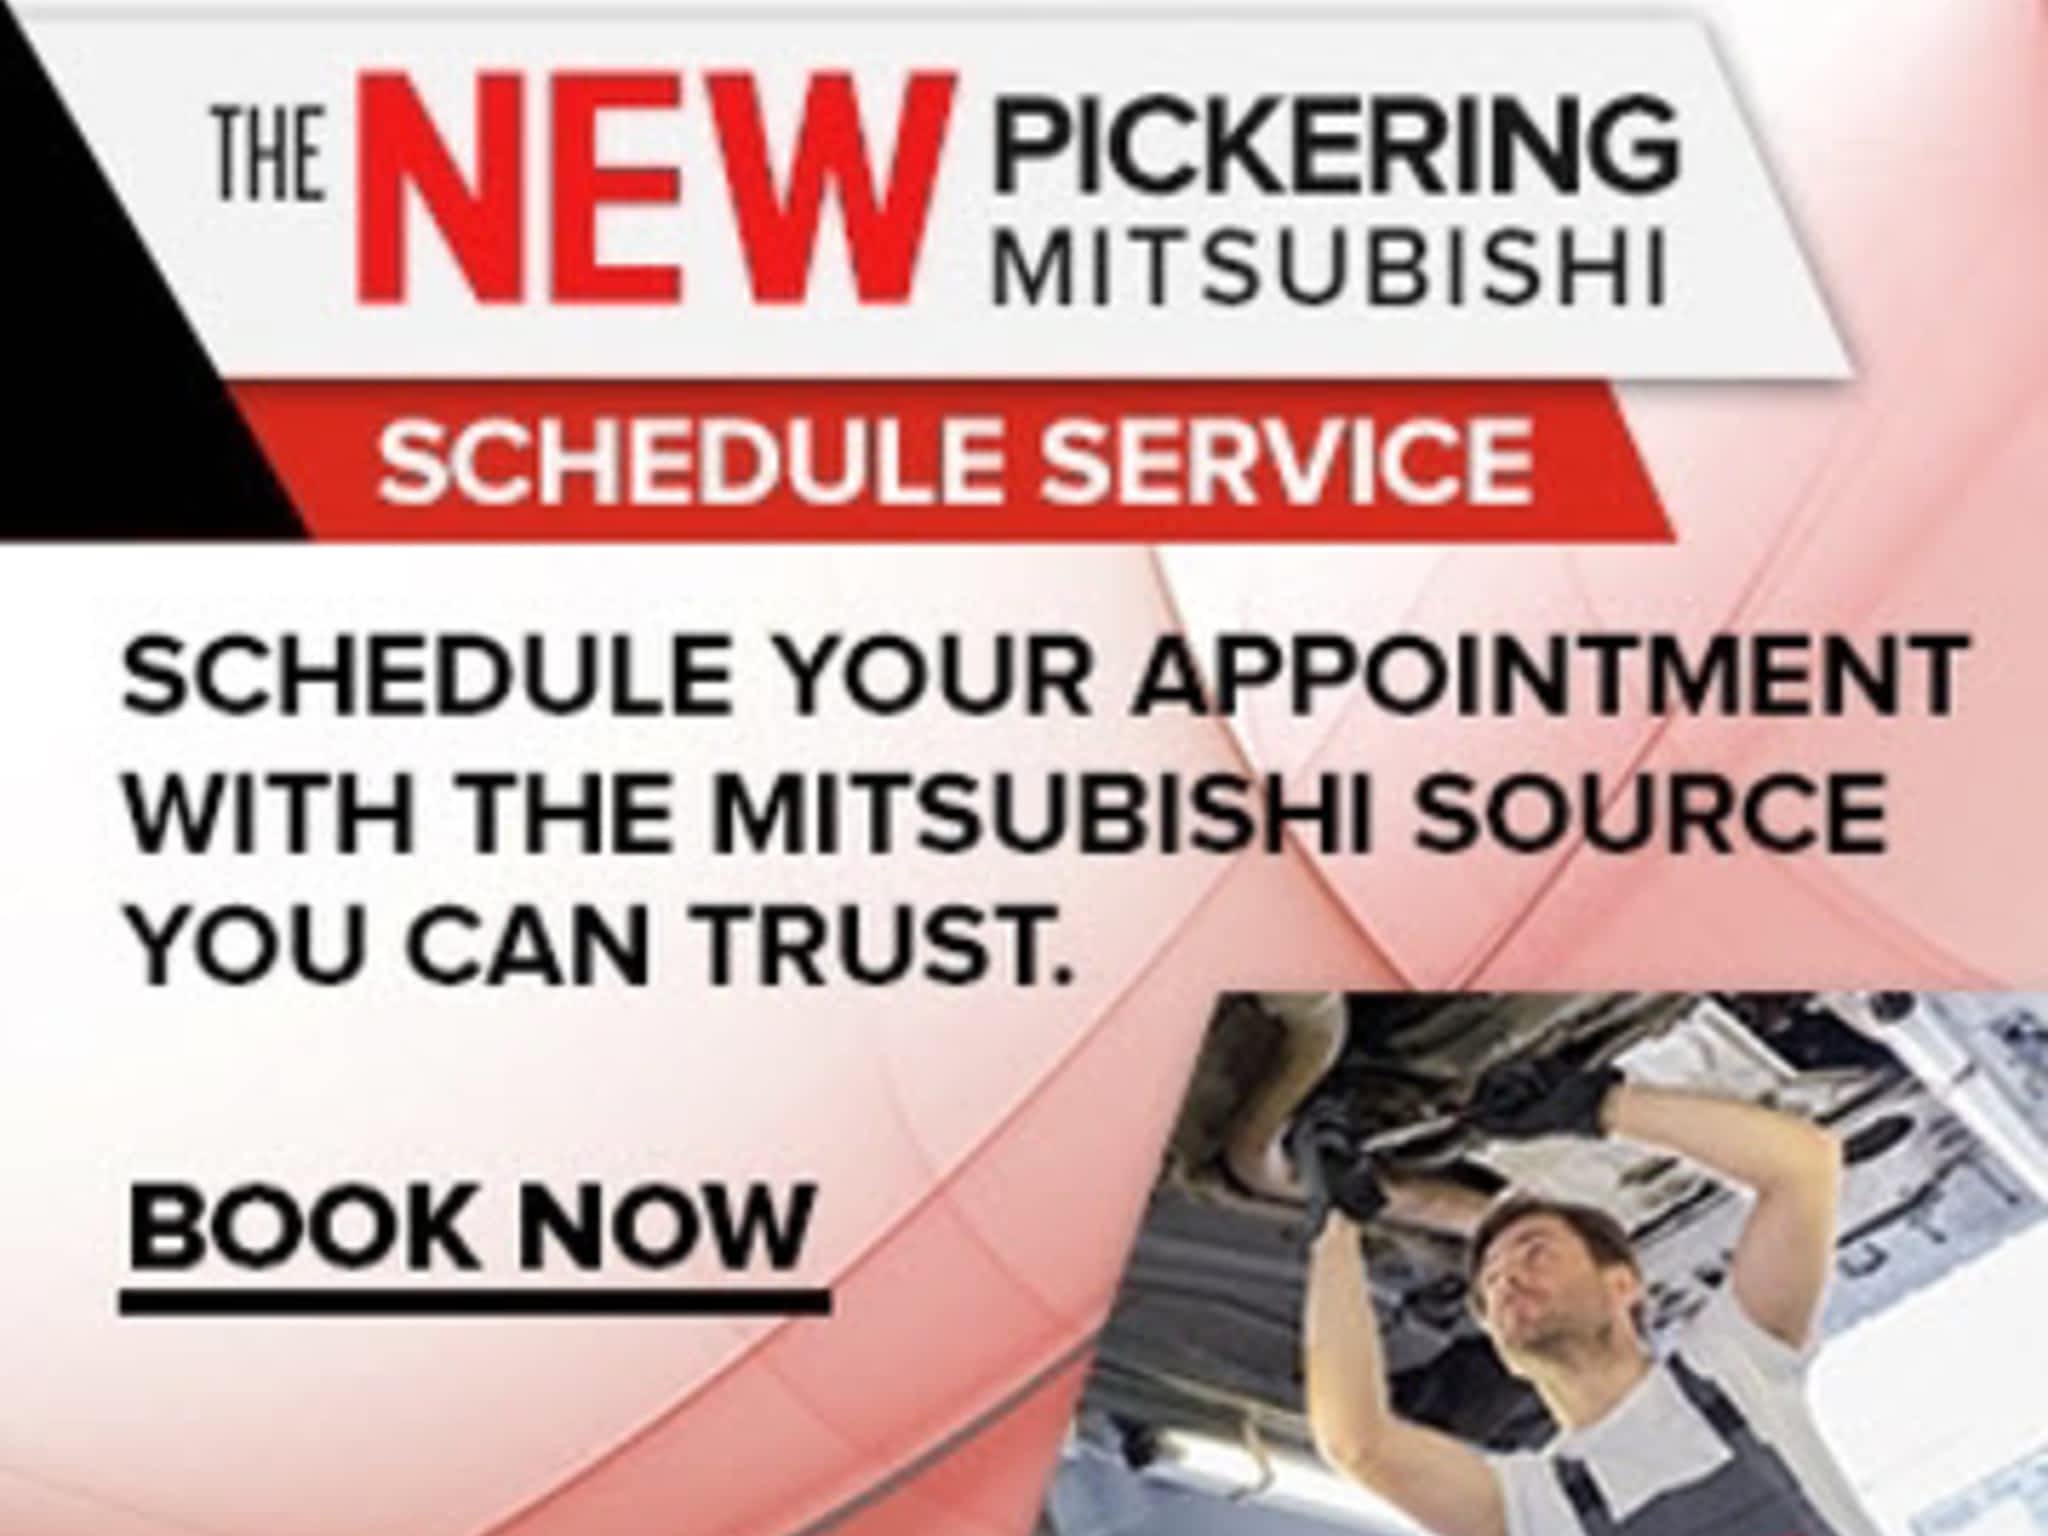 photo Pickering Mitsubishi